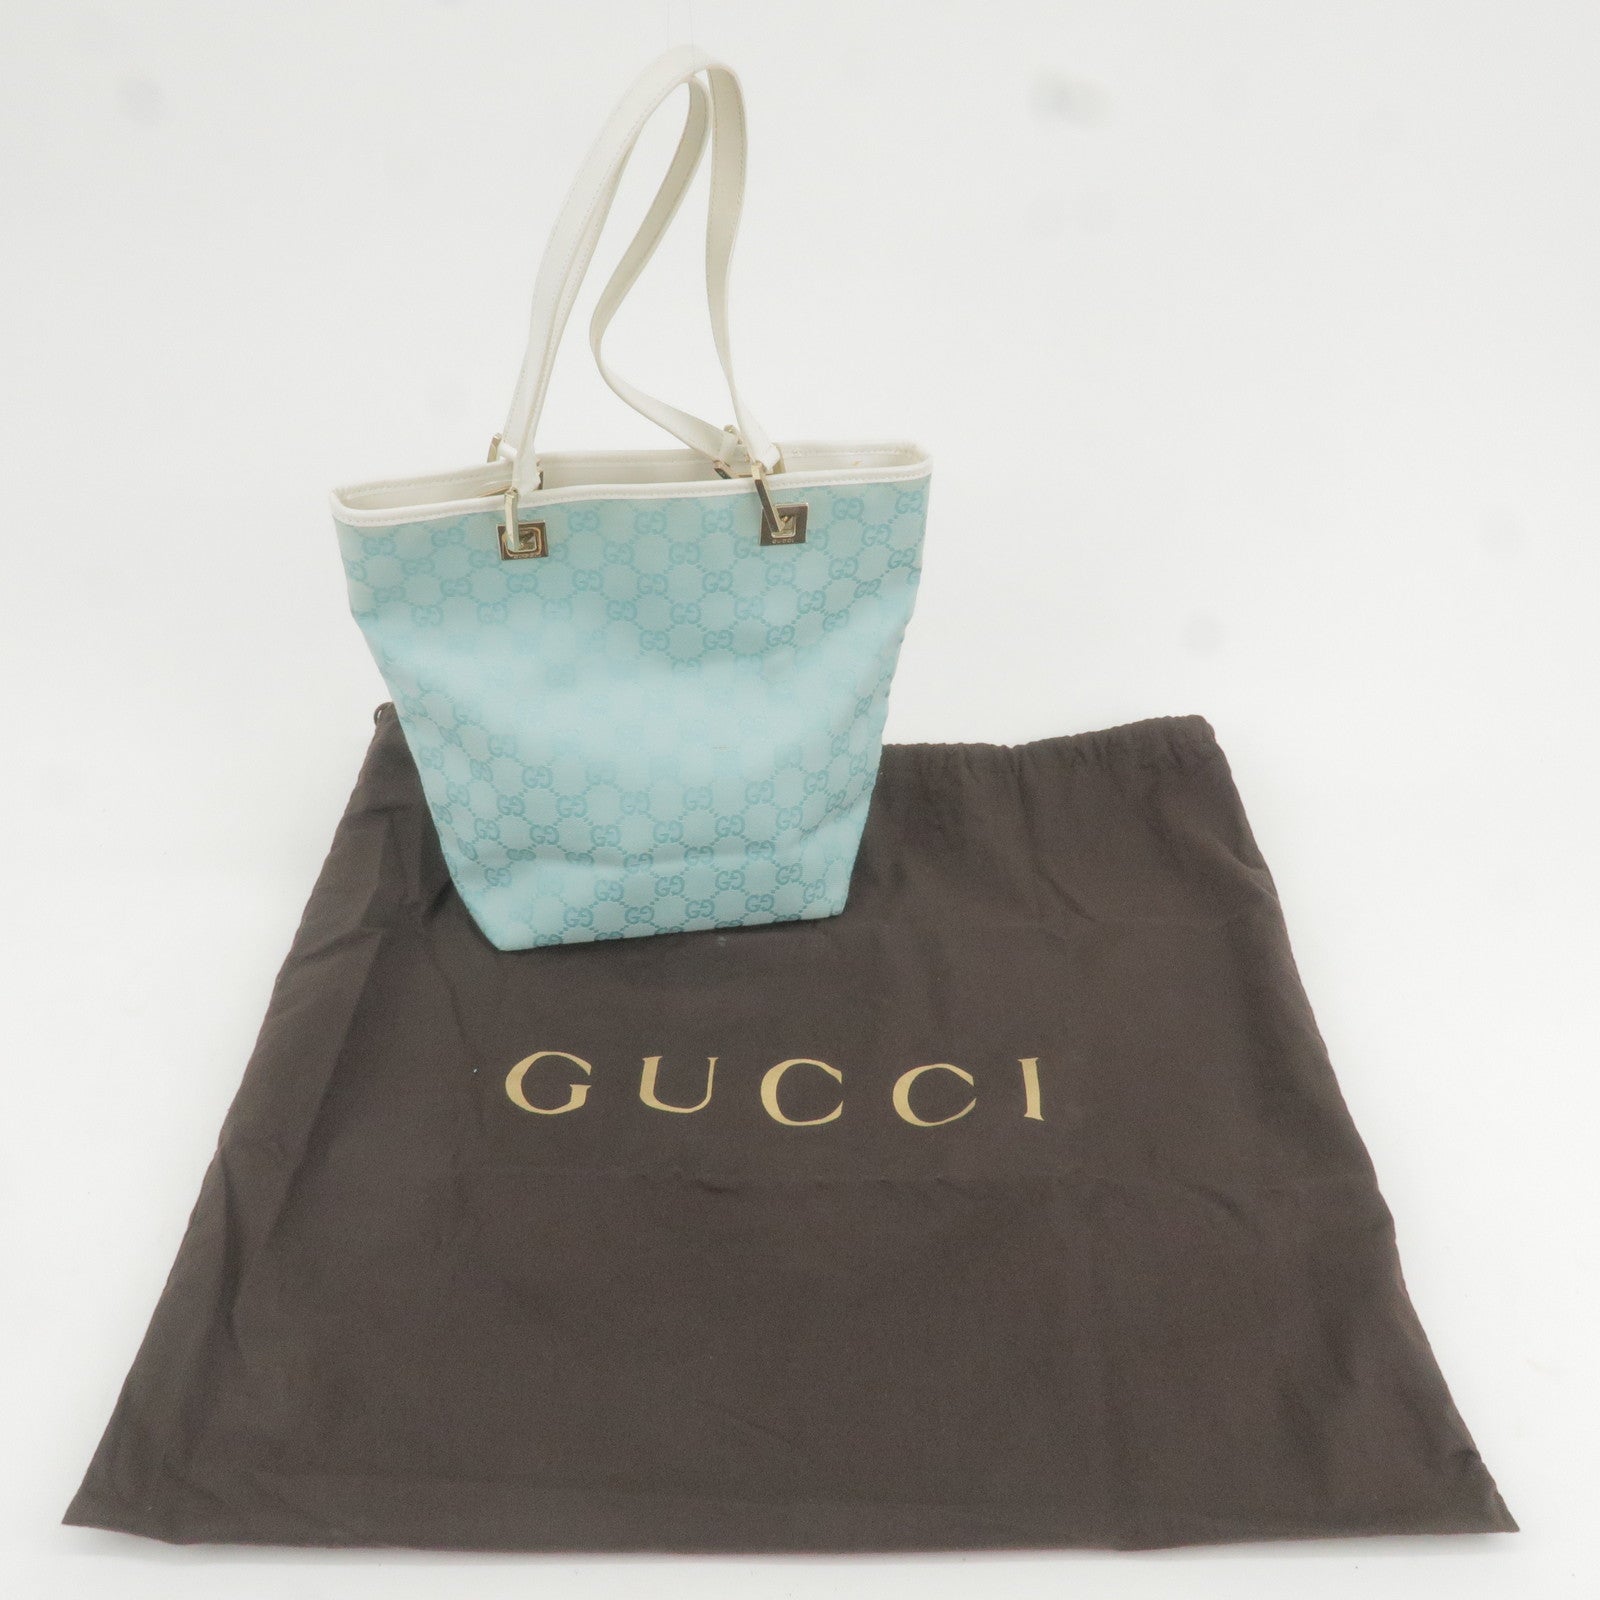 Gucci Tote Bag Light Blue Canvas